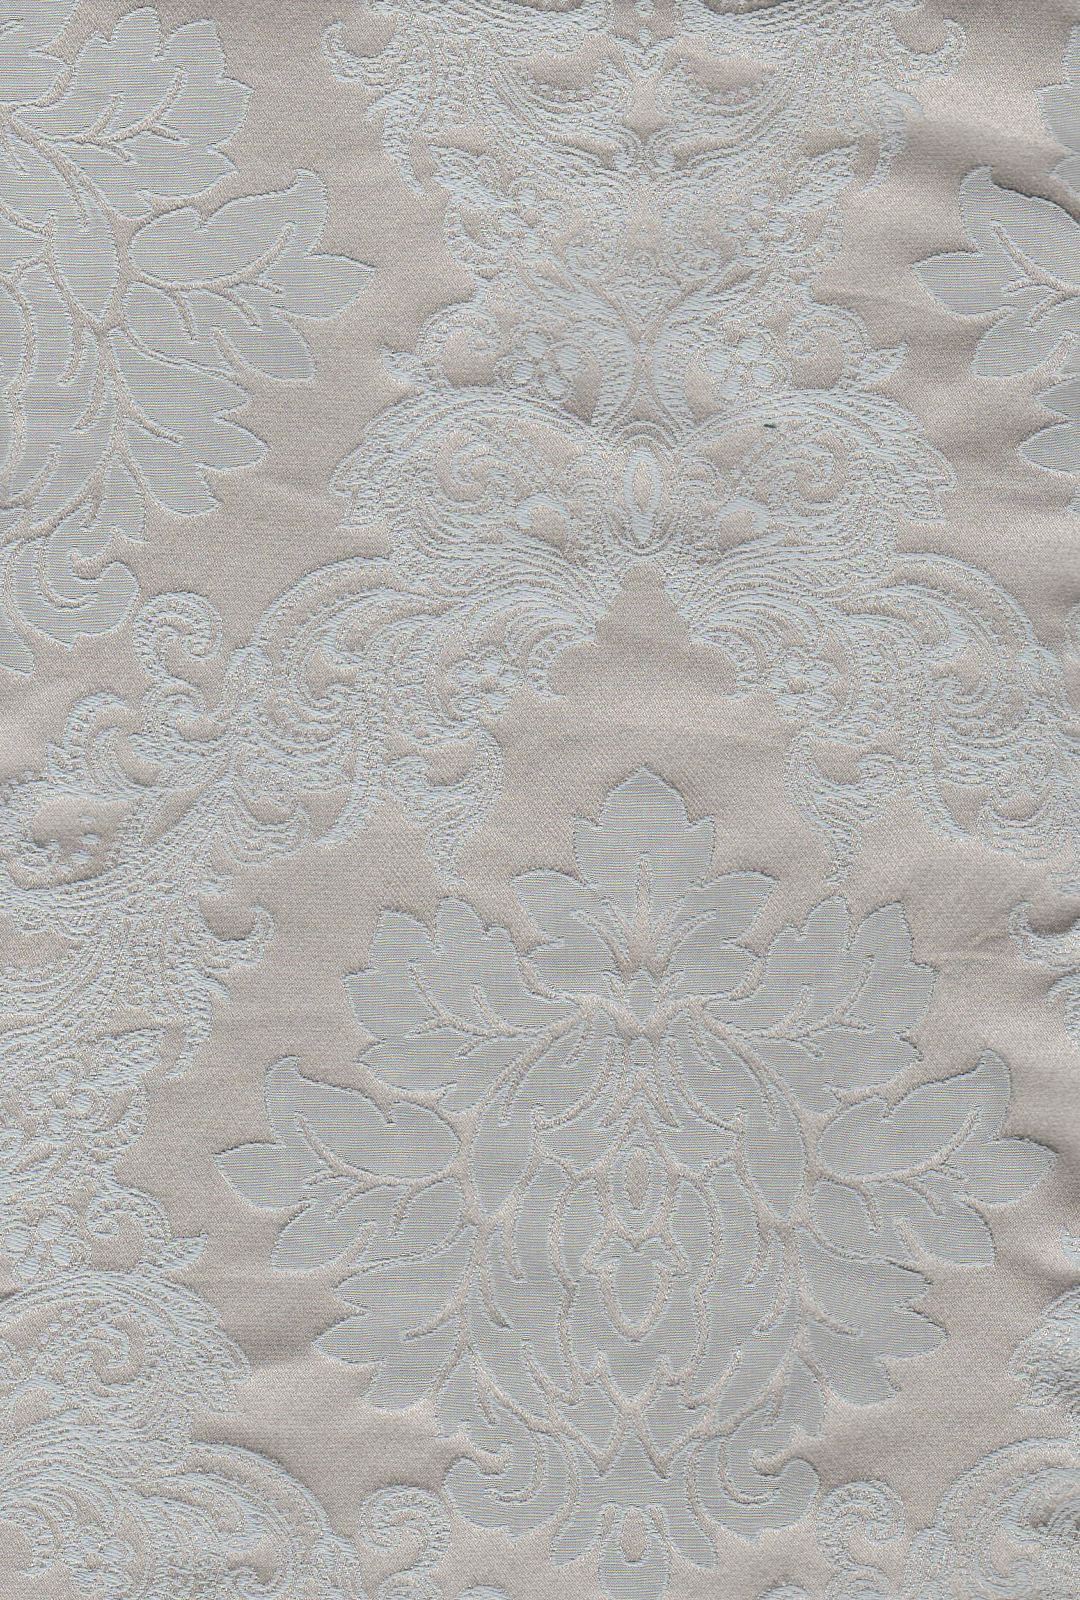 Cali Fabrics Warm White Medallion Pattern Stretch Lace Fabric by